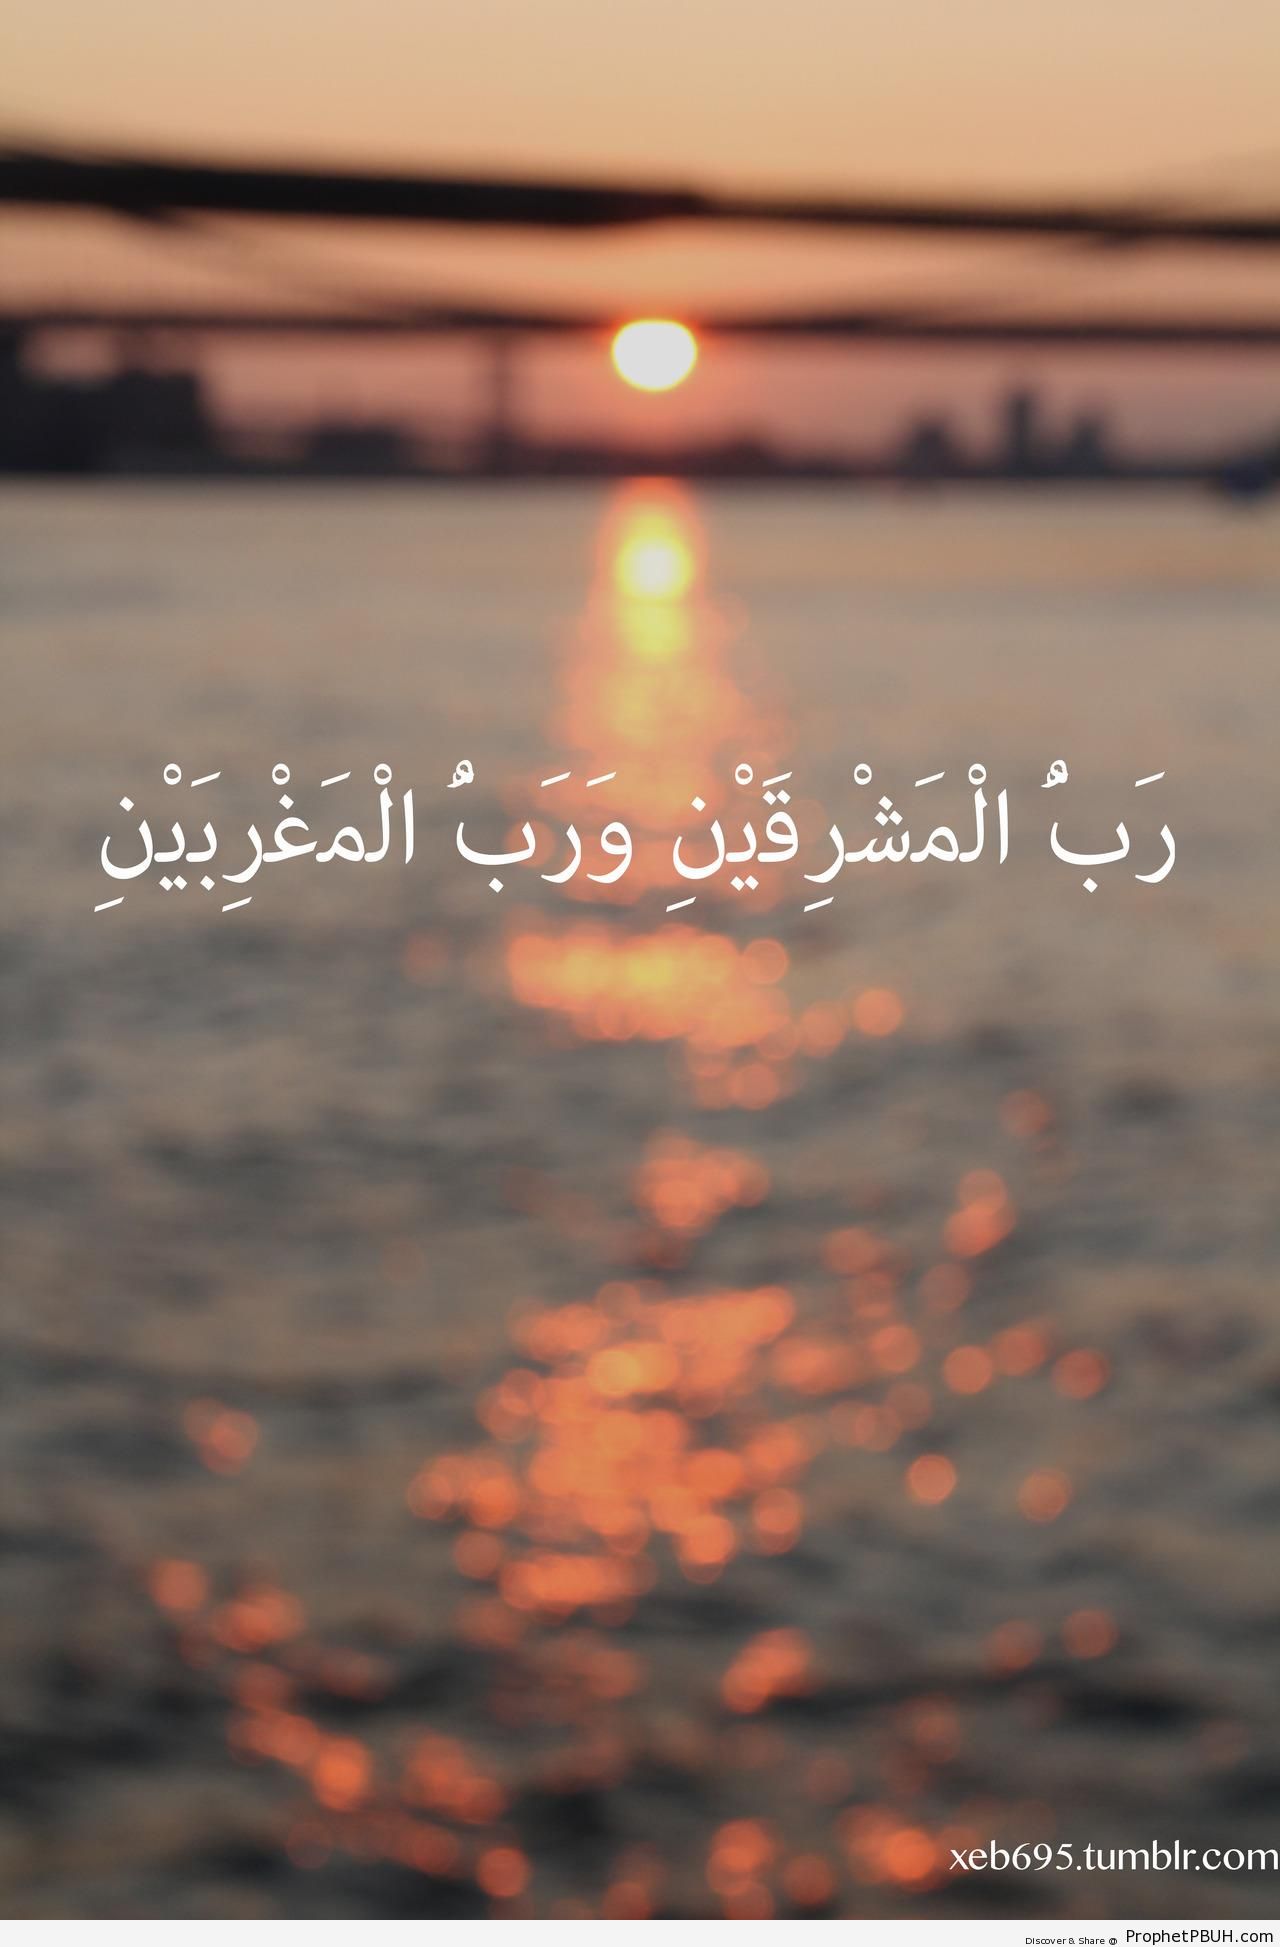 Sunrise and Sunset (Quran 55-17; Surat ar-Rahman) - Photos 